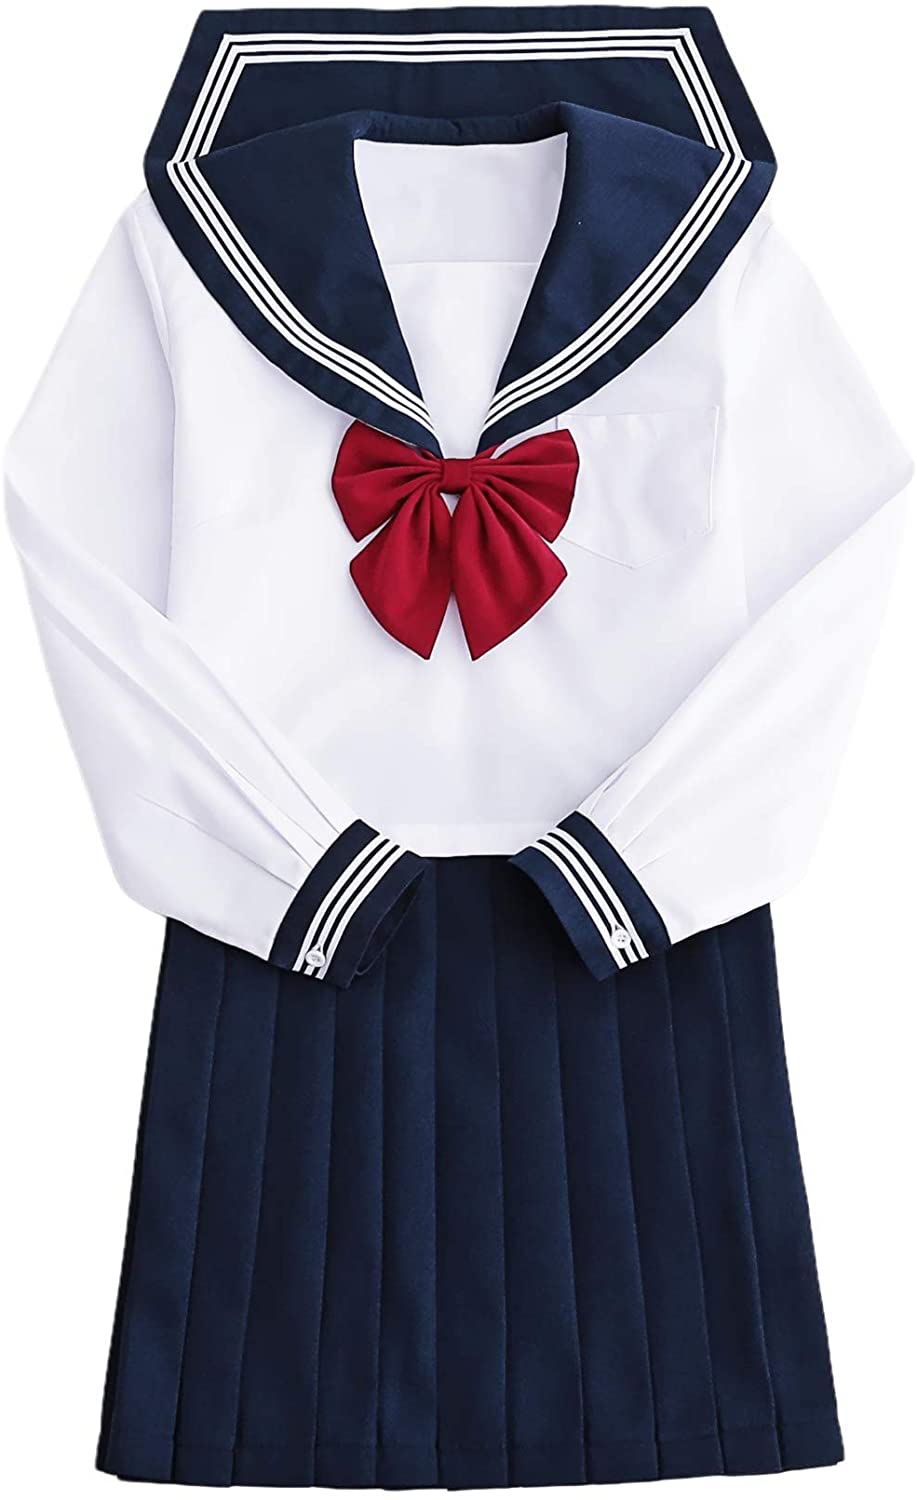 School Girls Uniform Navy Blue1